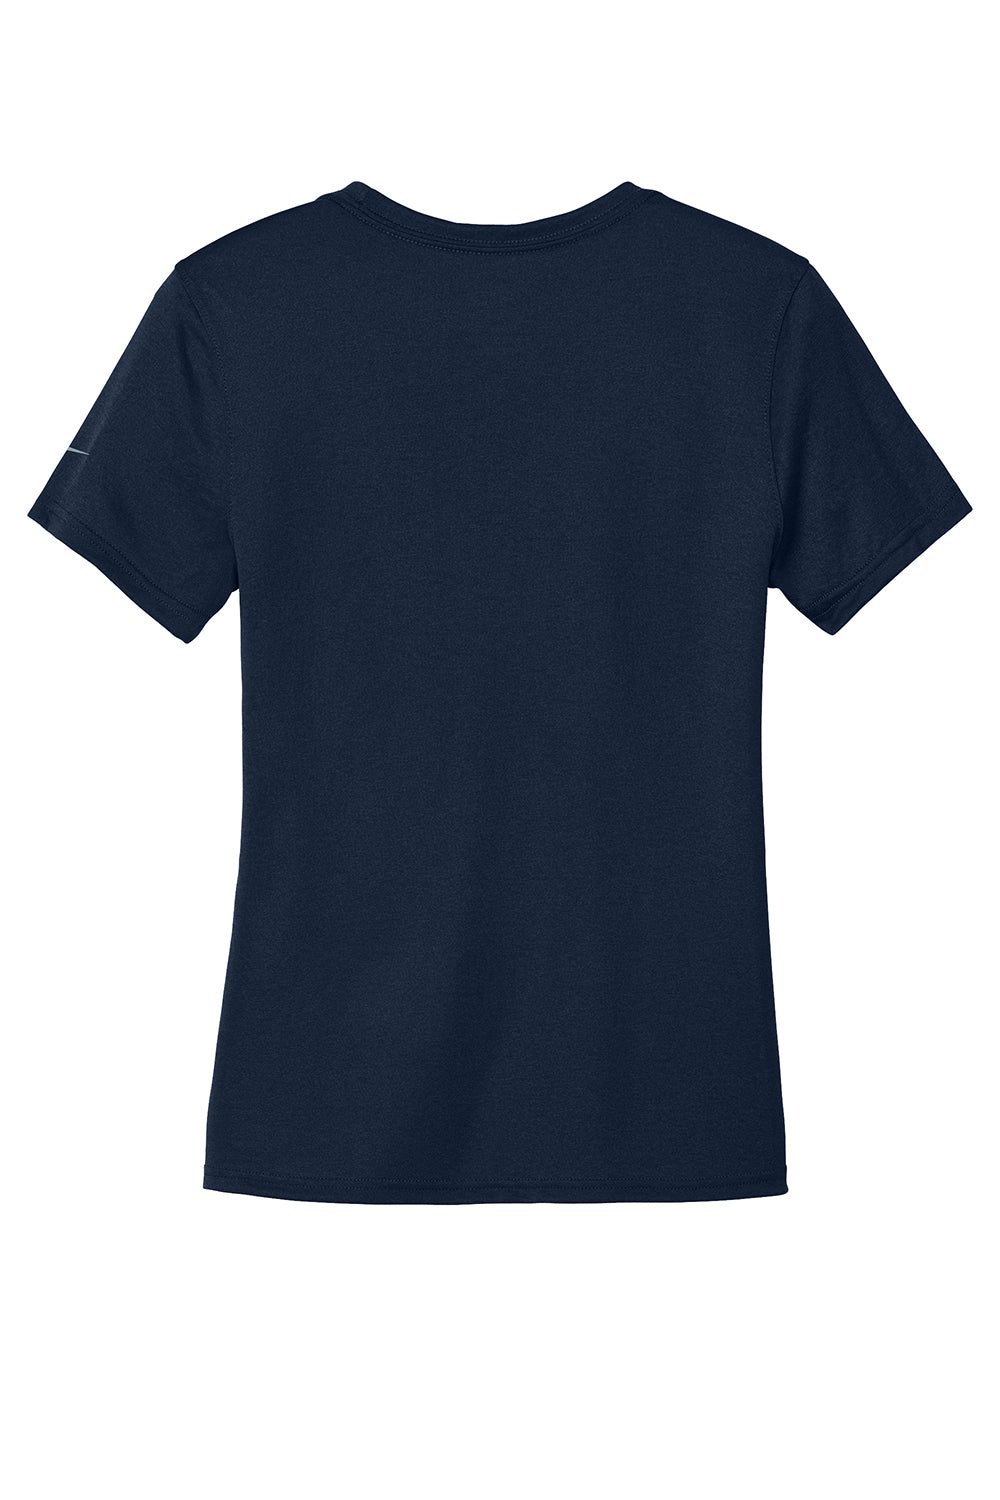 Nike NKDX8734 Womens rLegend Dri-Fit Moisture Wicking Short Sleeve Crewneck T-Shirt College Navy Blue Flat Back